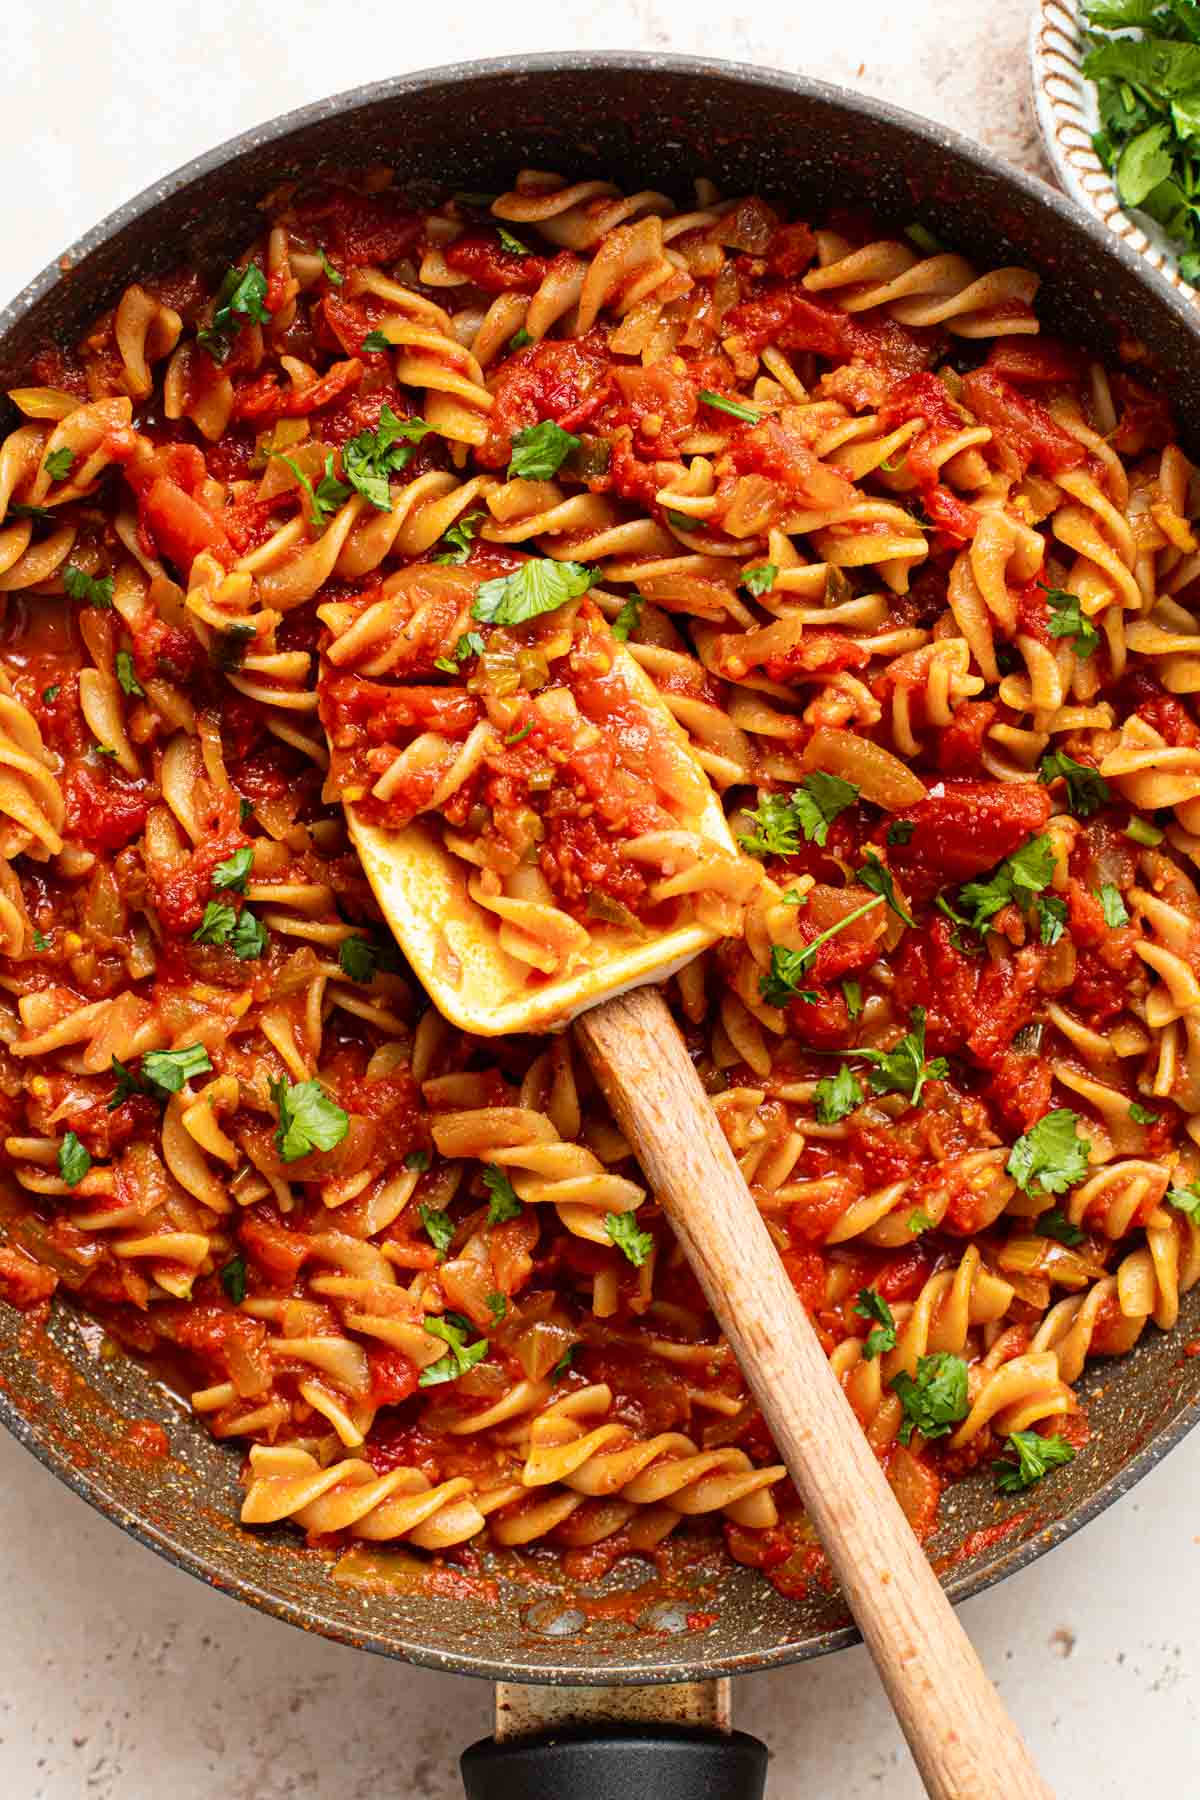 A pan filled with pasta sauce.